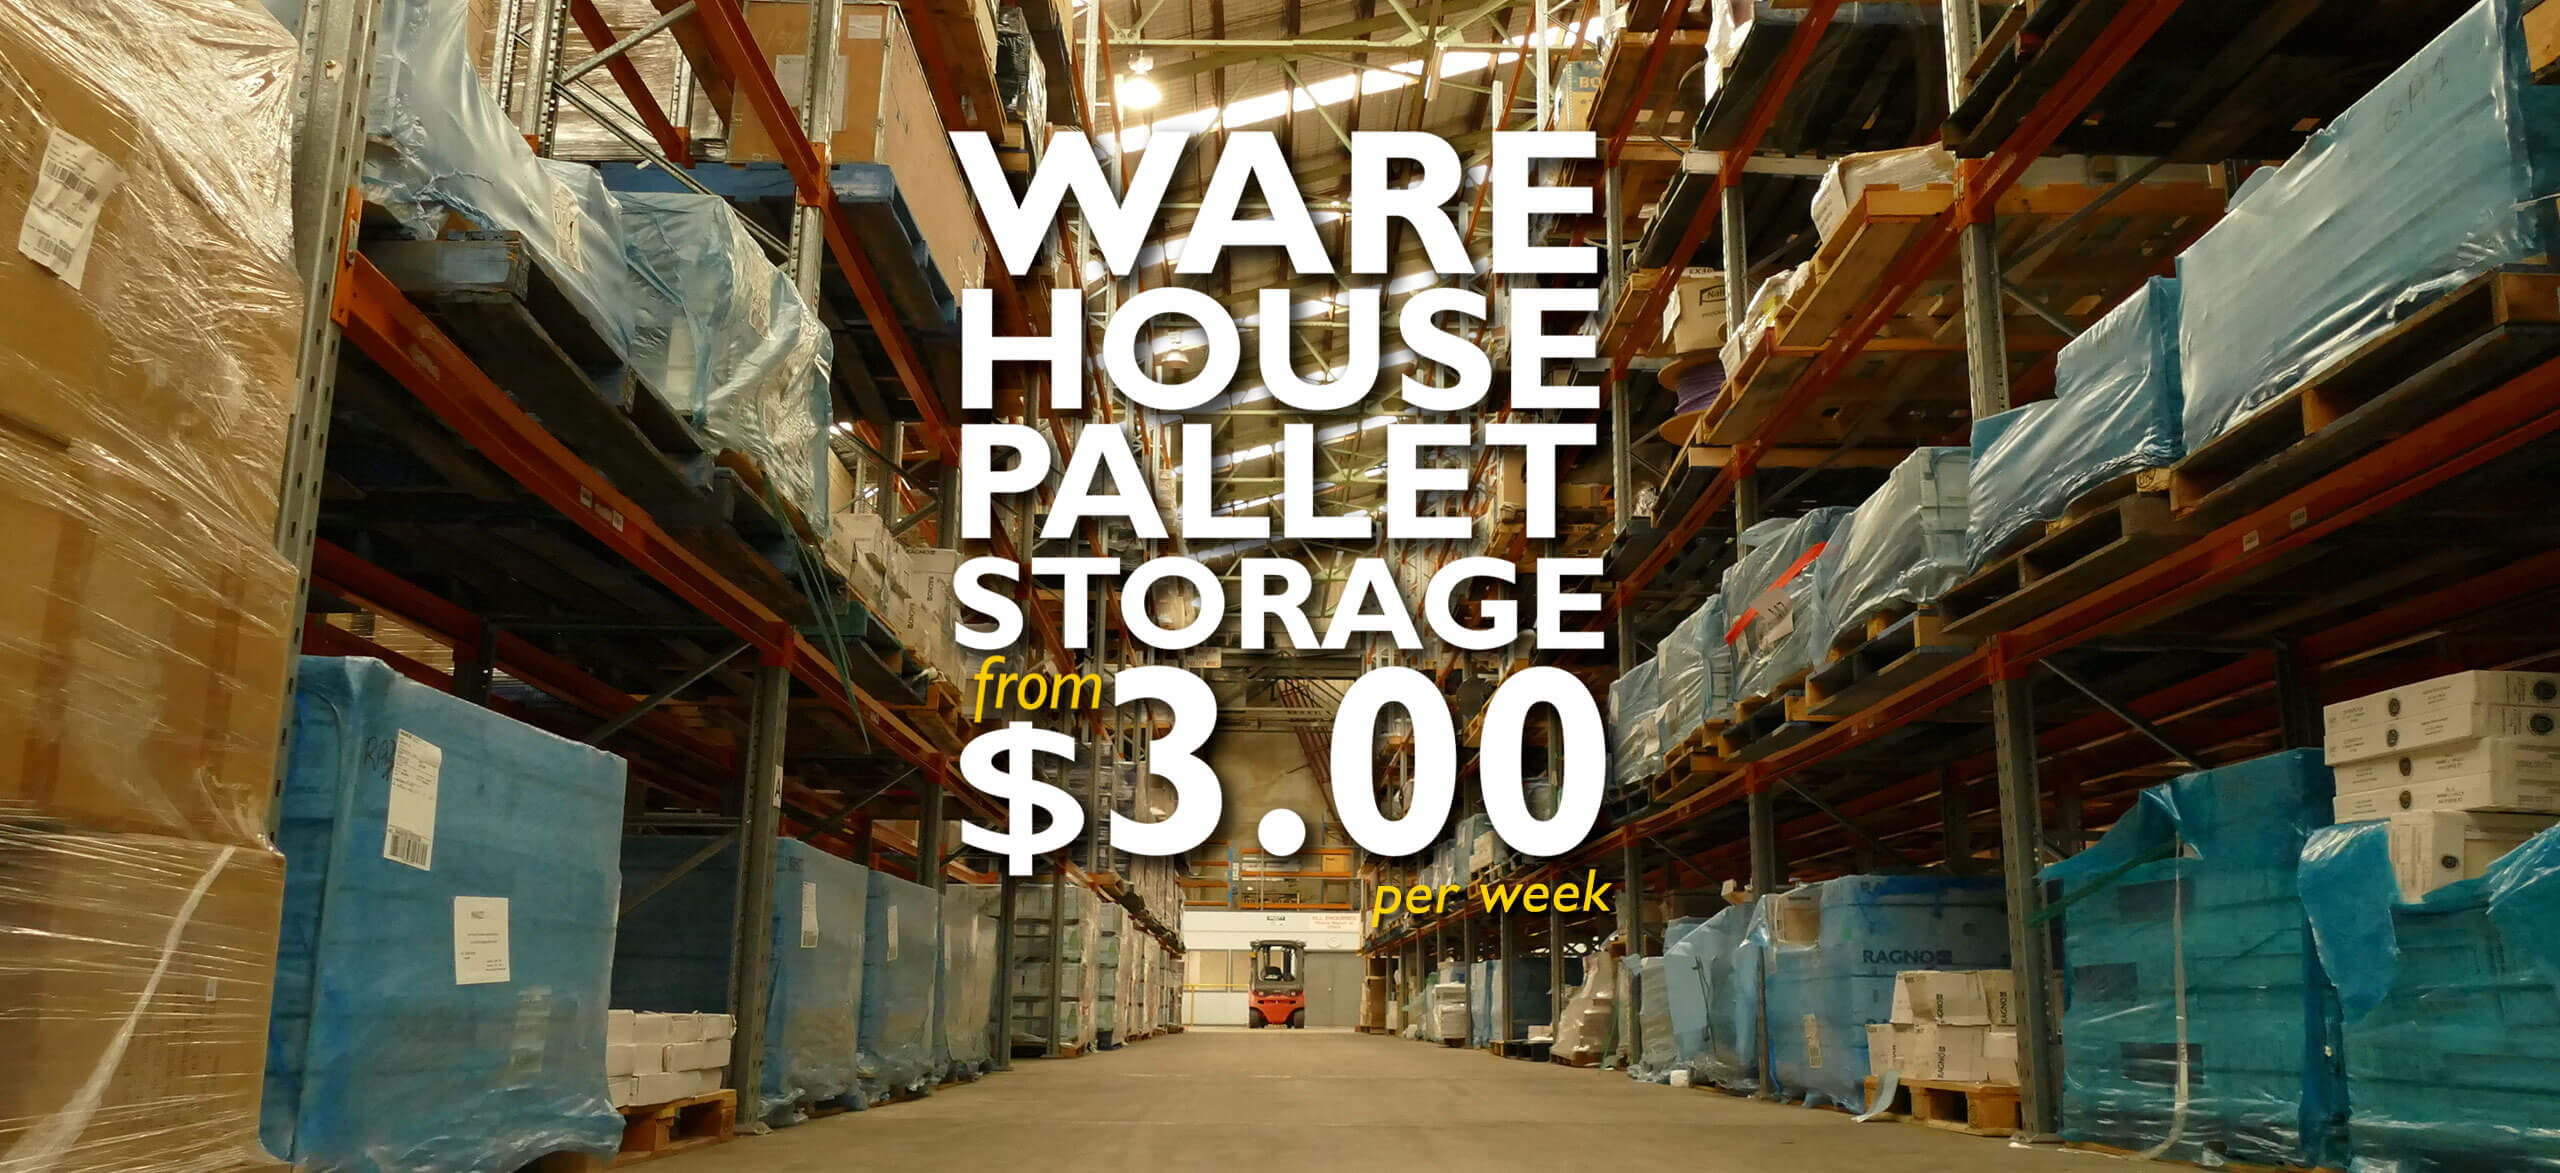 Warehouse Pallet Storage from $3.00 per week